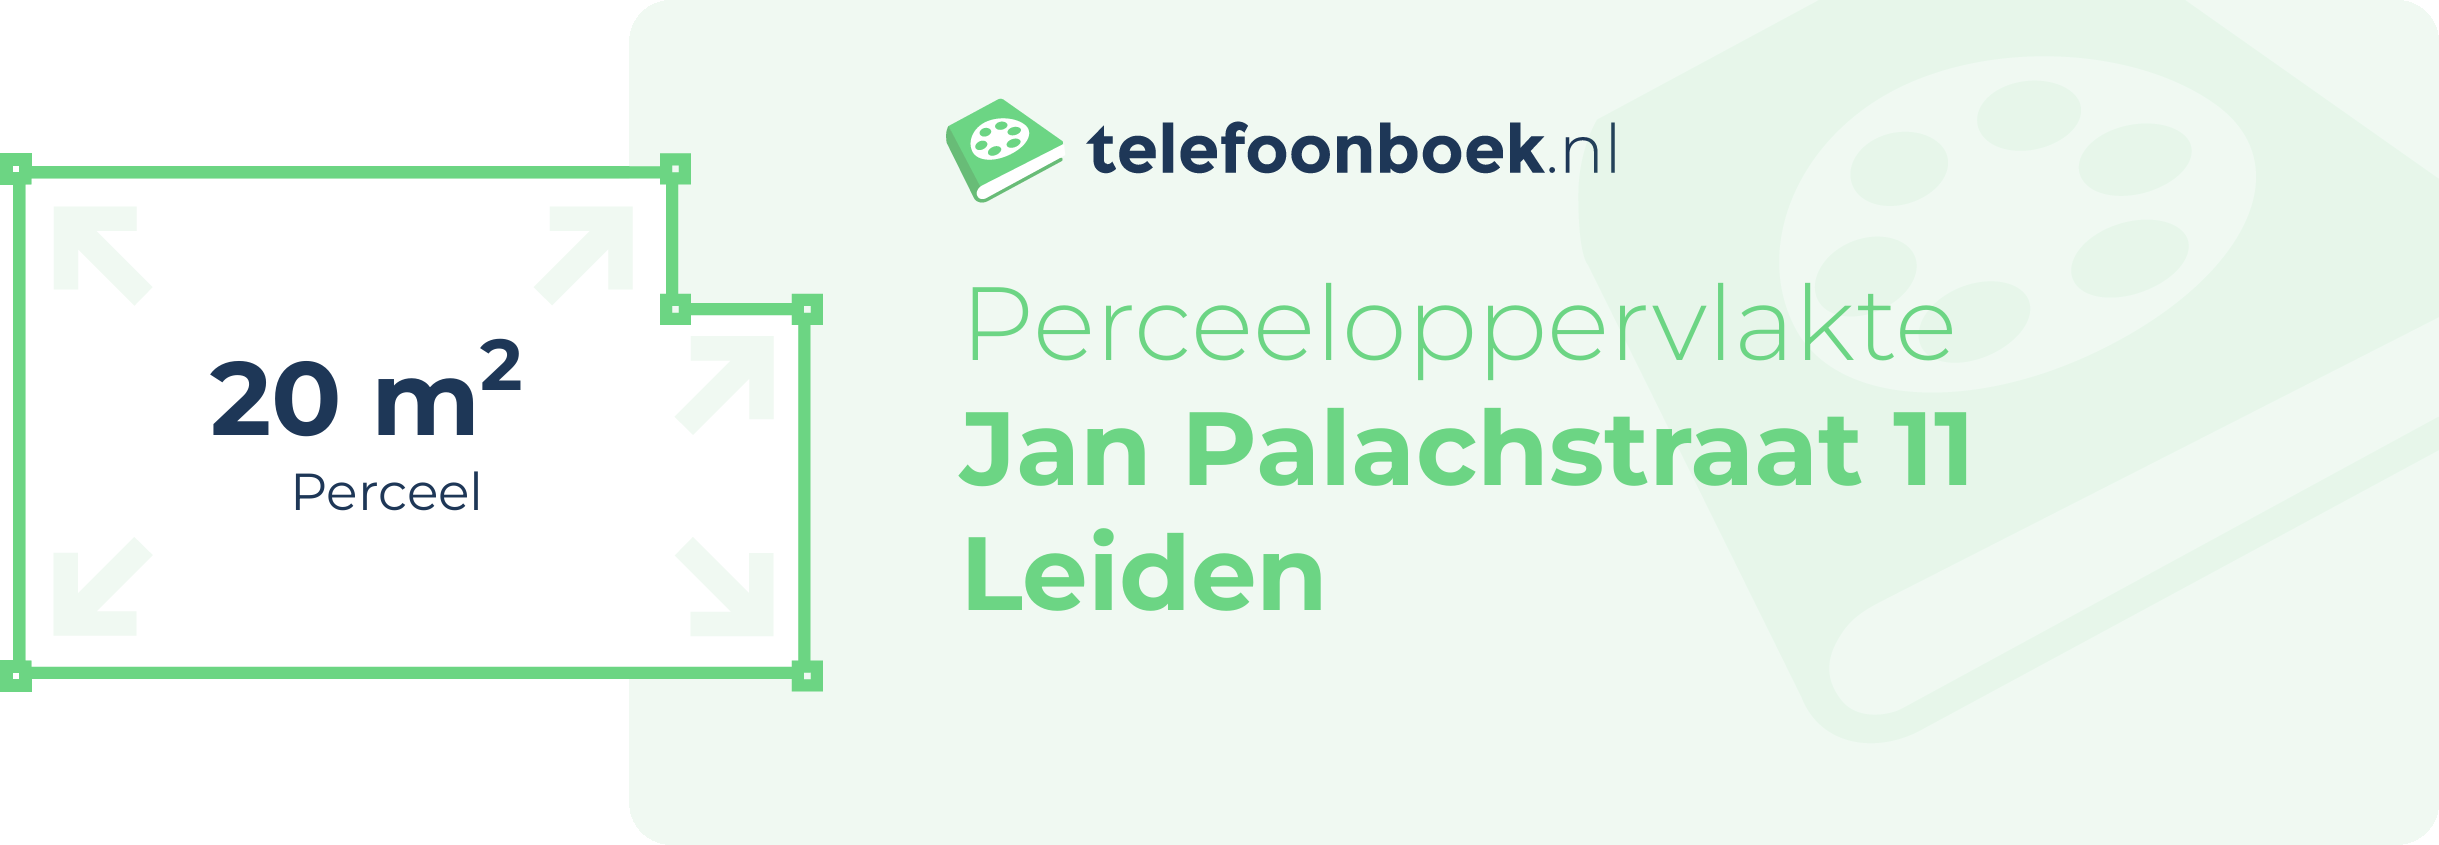 Perceeloppervlakte Jan Palachstraat 11 Leiden